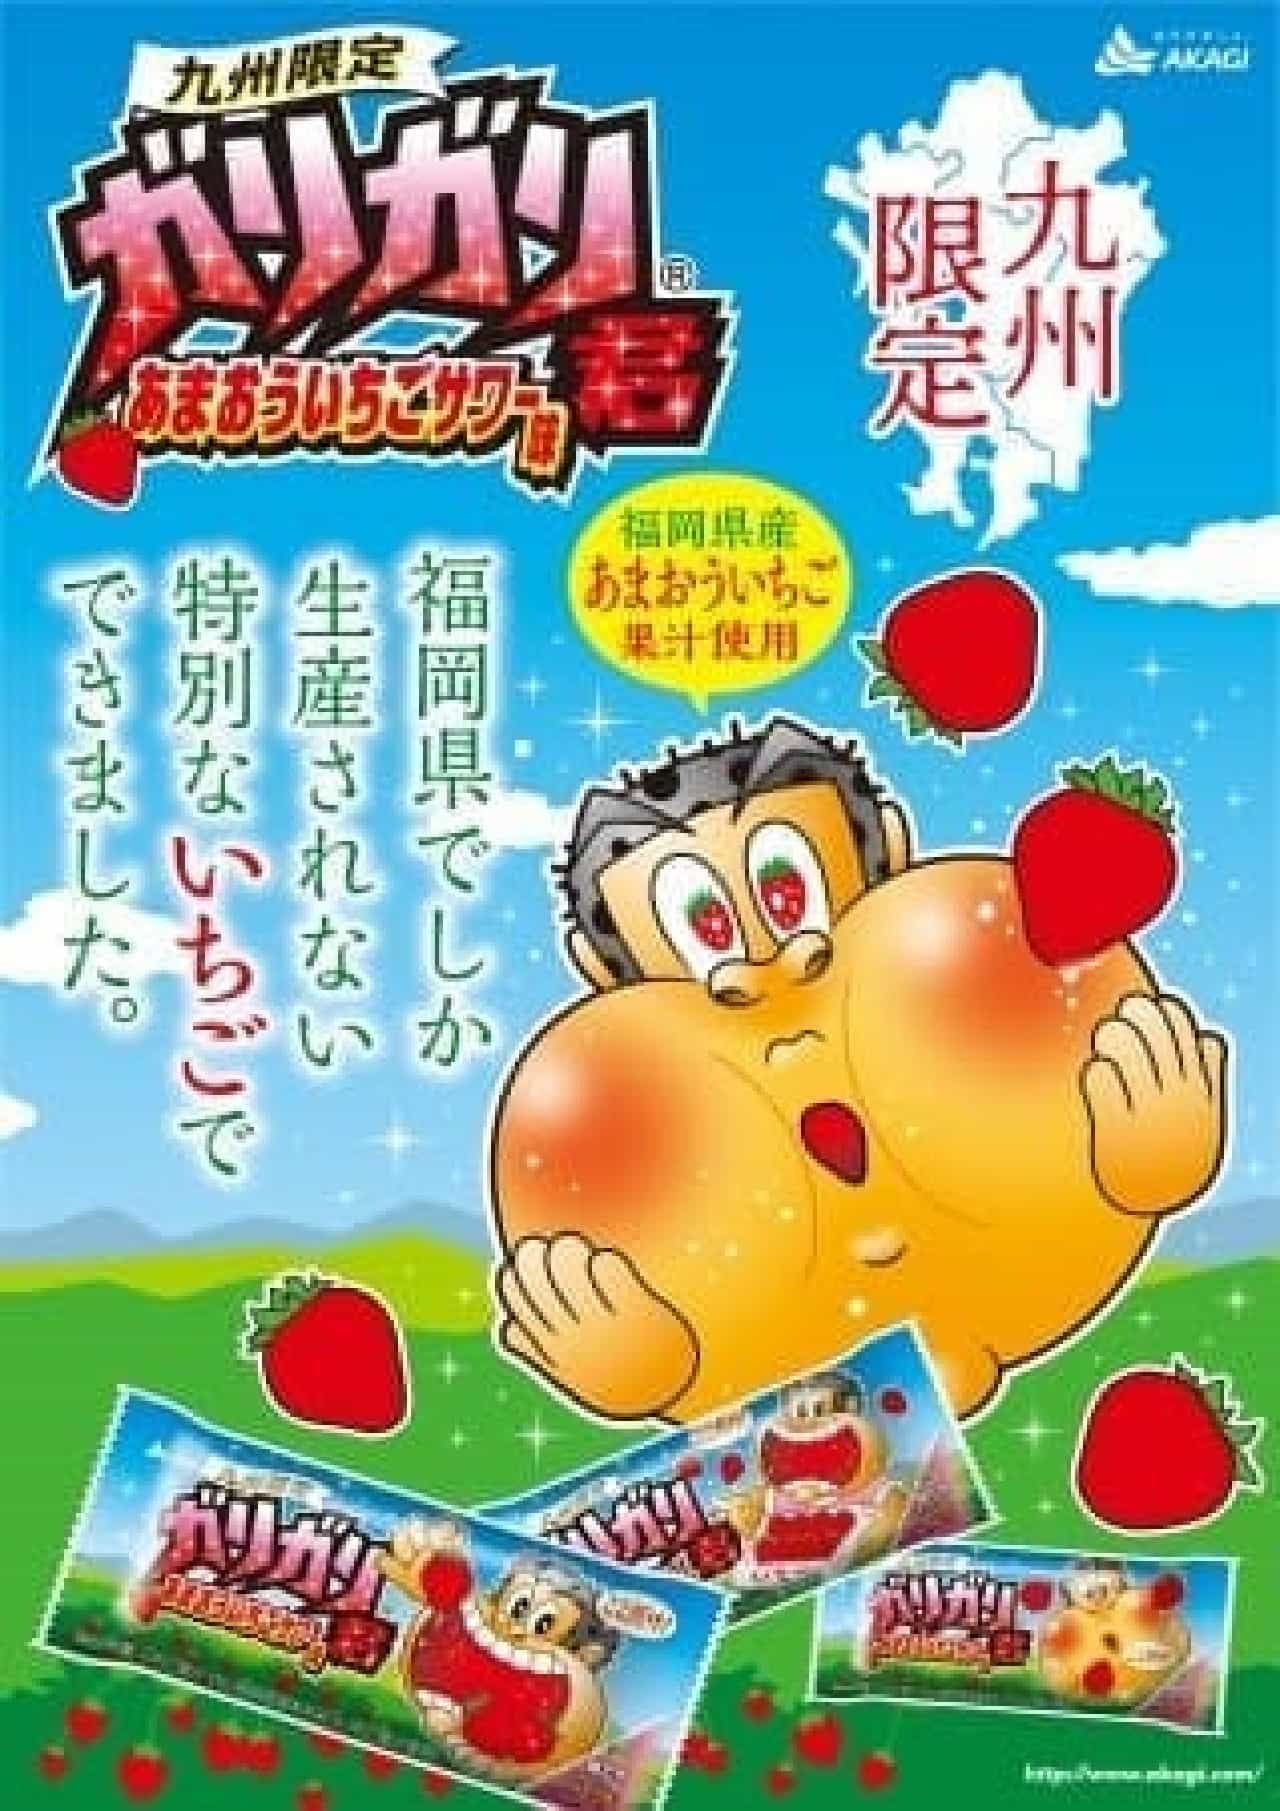 Gari-gari-kun "Amaou Strawberry Sour Flavor"